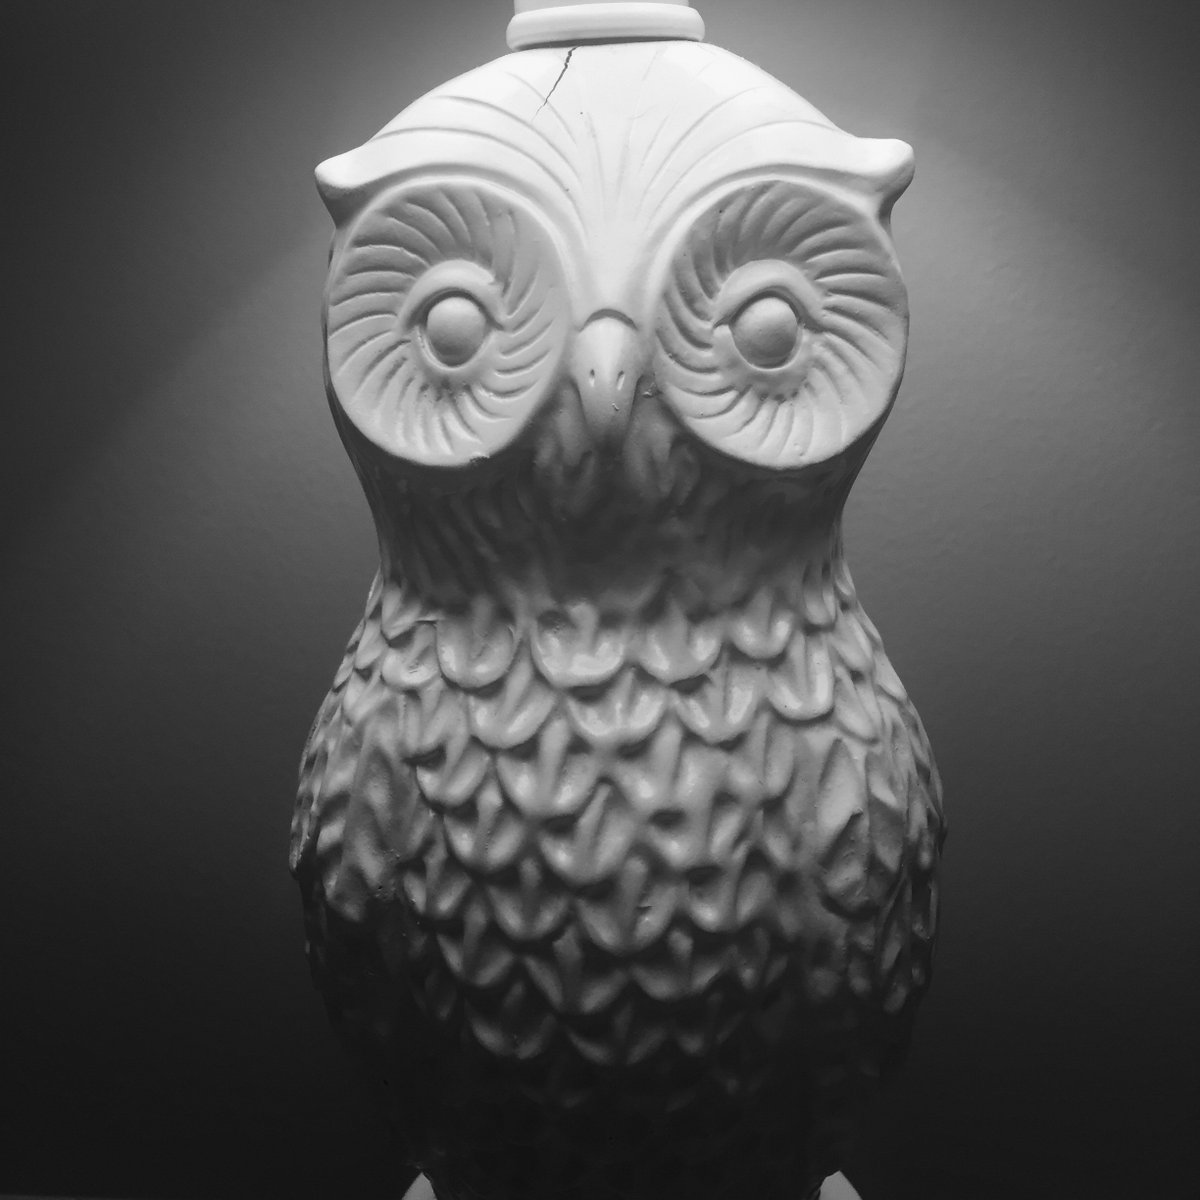 This owl lamp looks great in its own light. 
#Owl #objectphotography #owlsofinstagram #owllove #owlstagram #owllovers  #owlsome #owldrawing #owlet #owlcafe #owleyes #owlette #owlsaddicted #owlpost #Photowall_bw #bw_mania #theworldshotz_bnw #photography